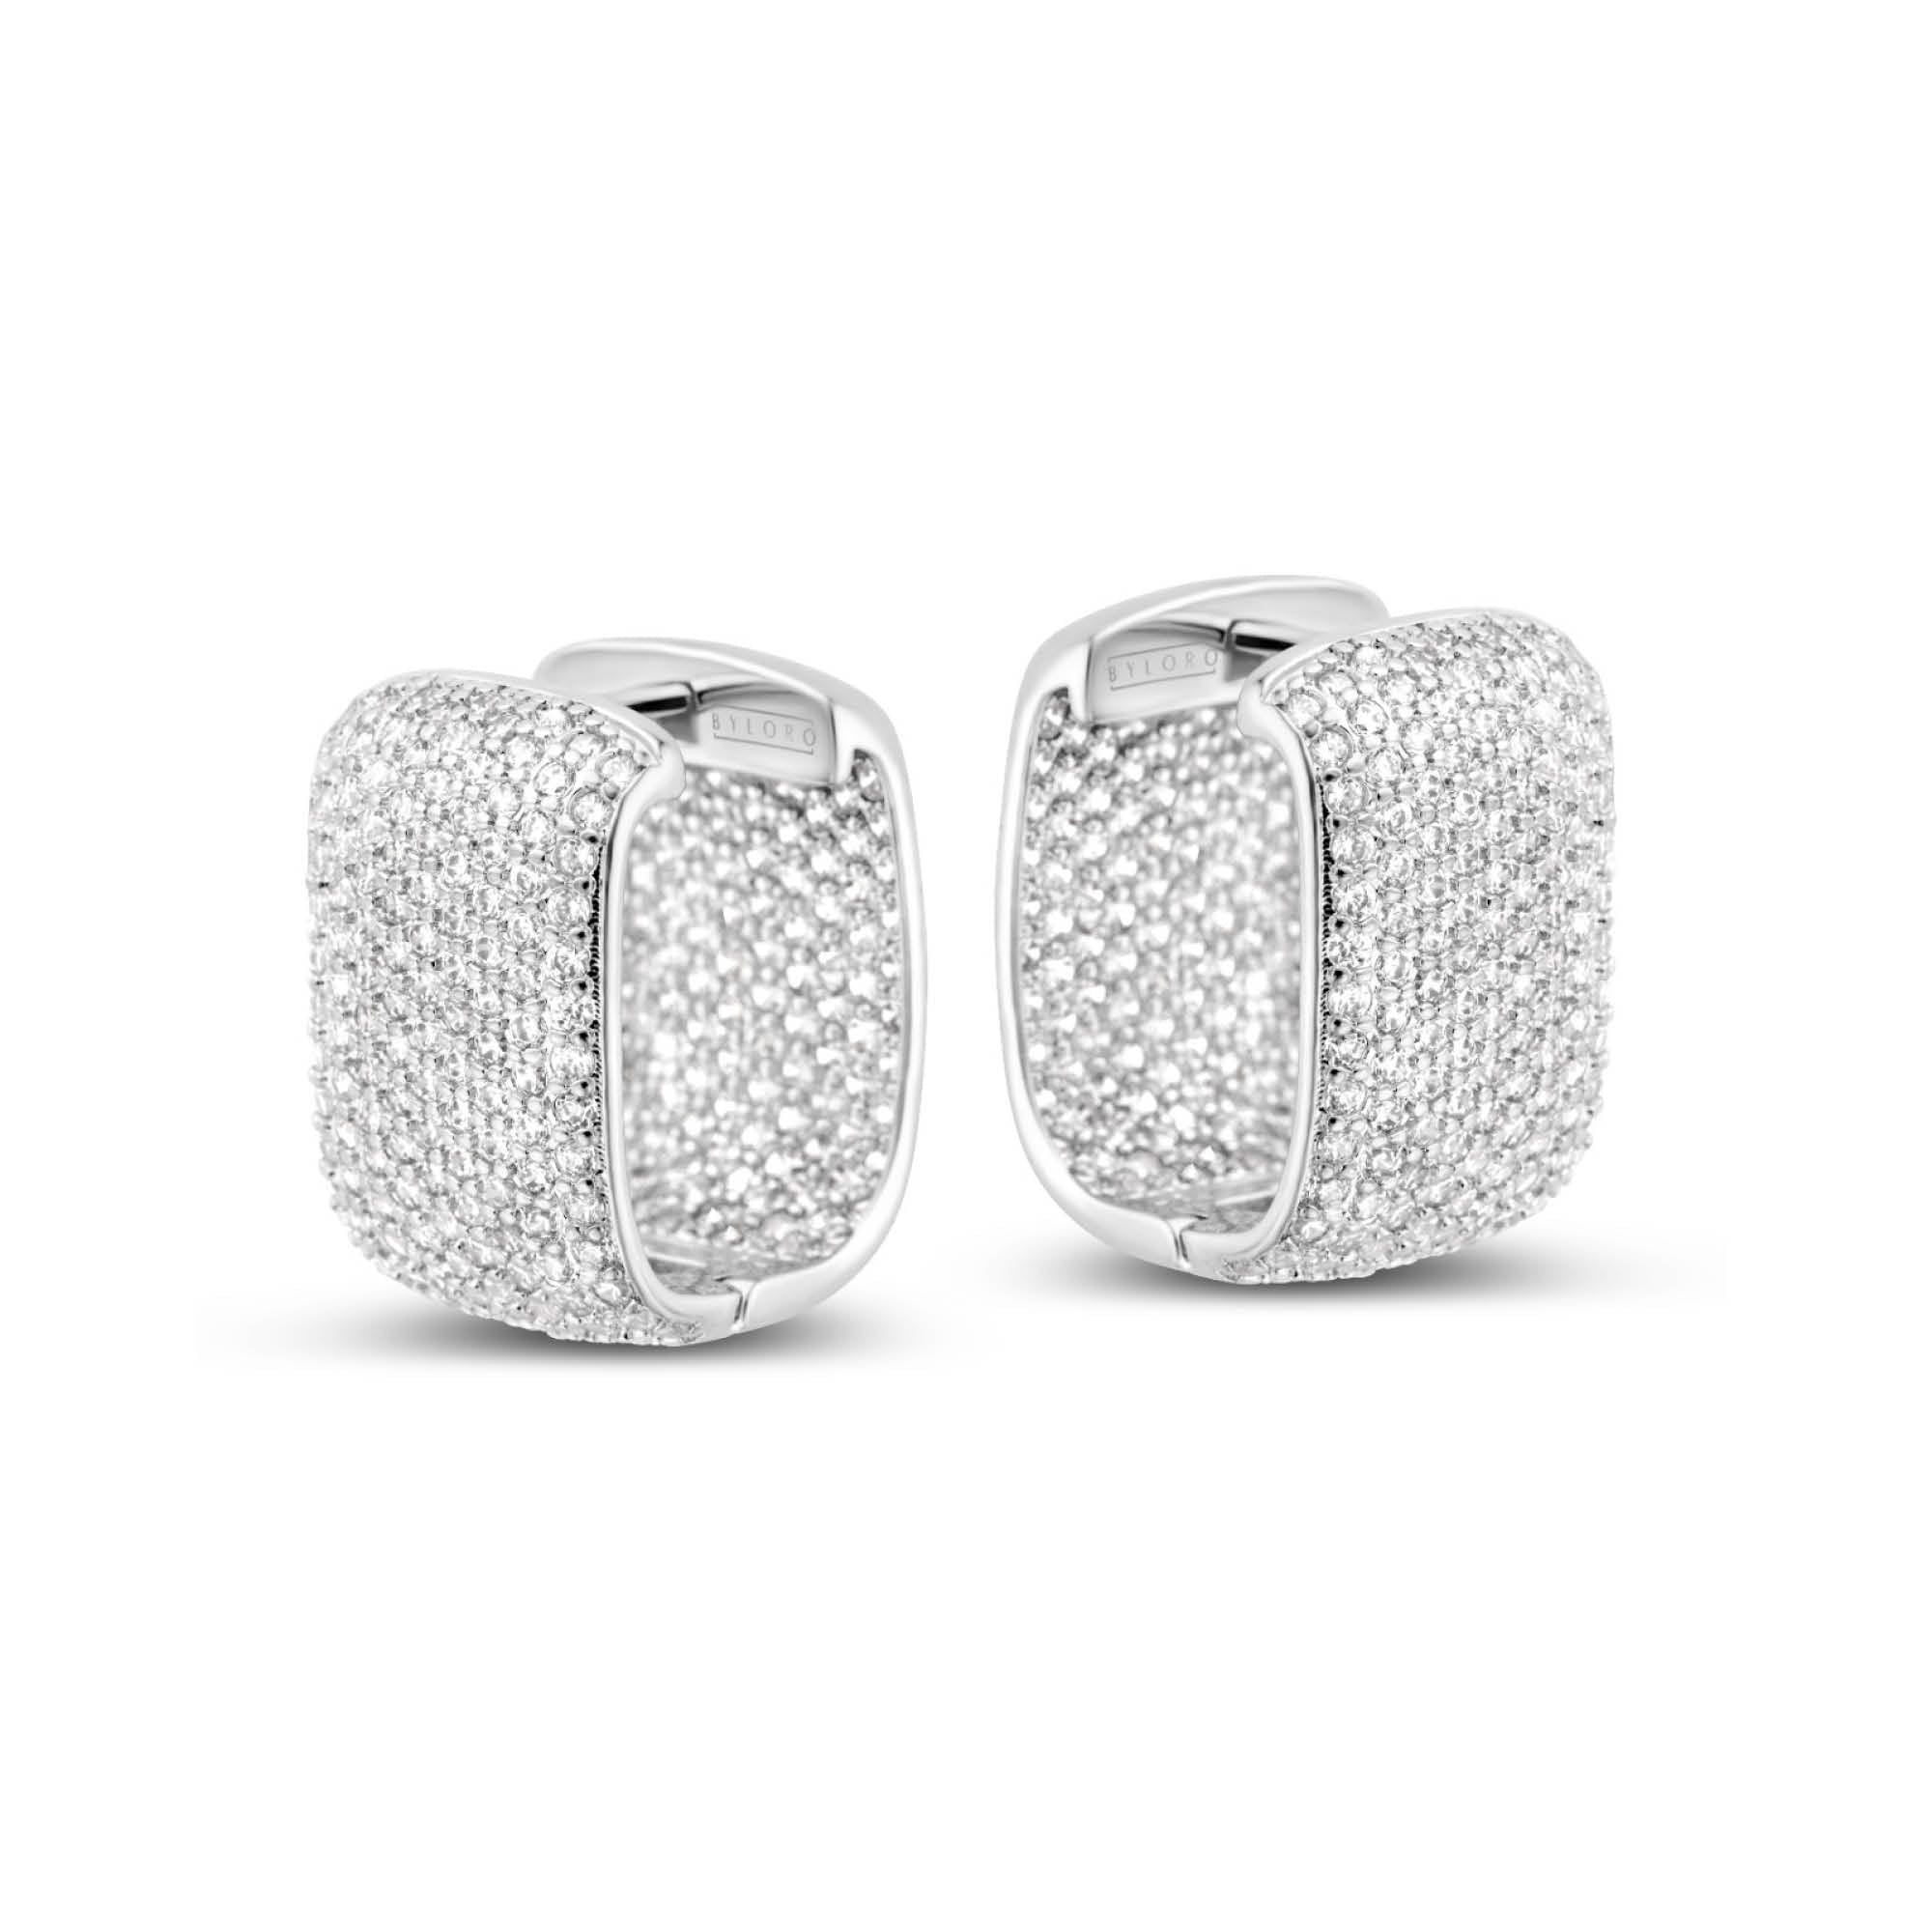 Champagne Tiffany earrings [ROSÉ] ❤ CELEB CHOICE*